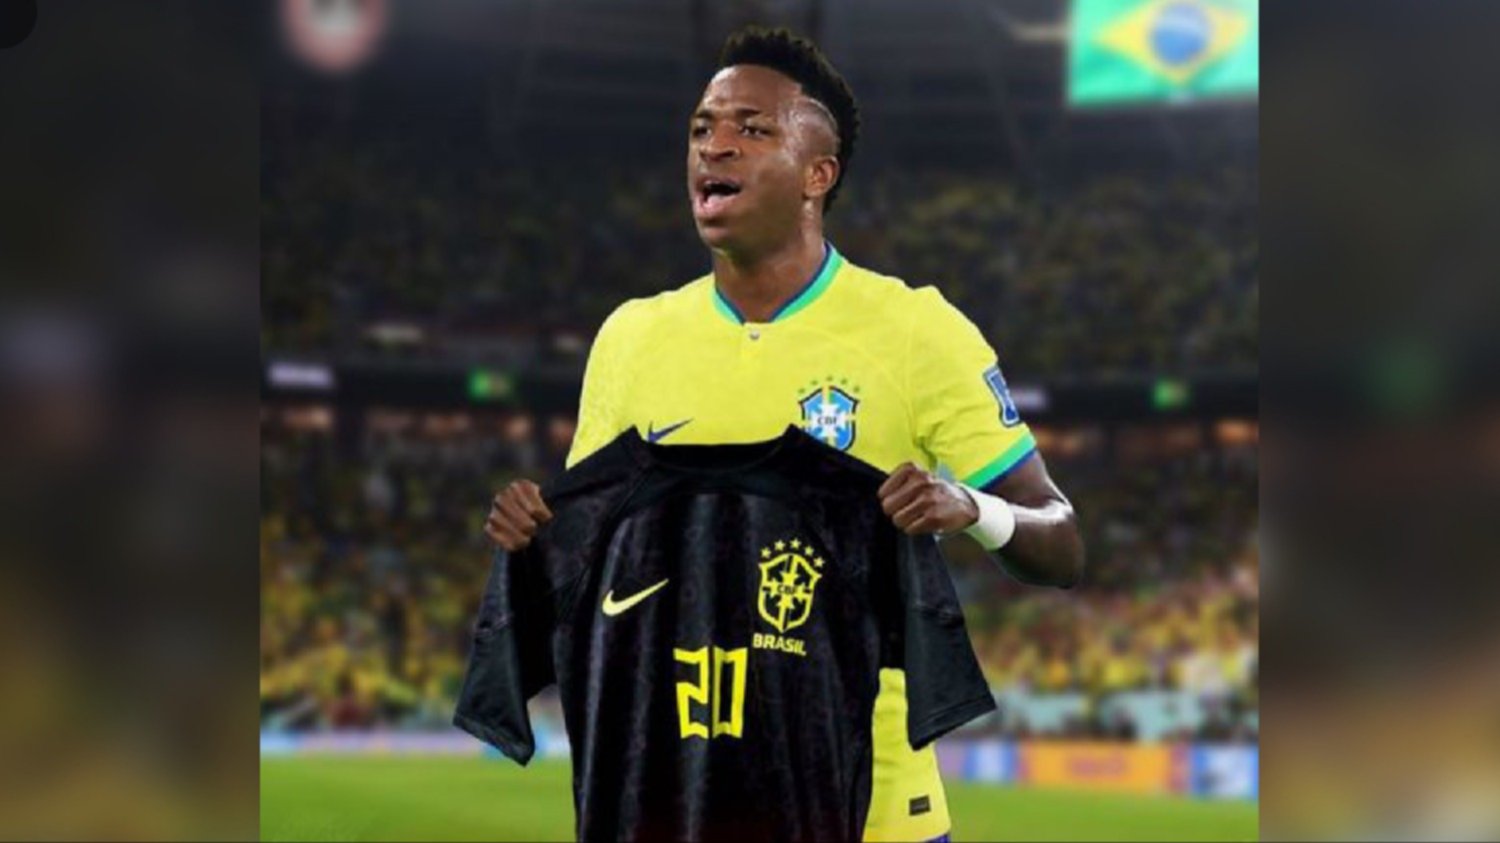 La histórica razón por la que Brasil jugó con camiseta negra